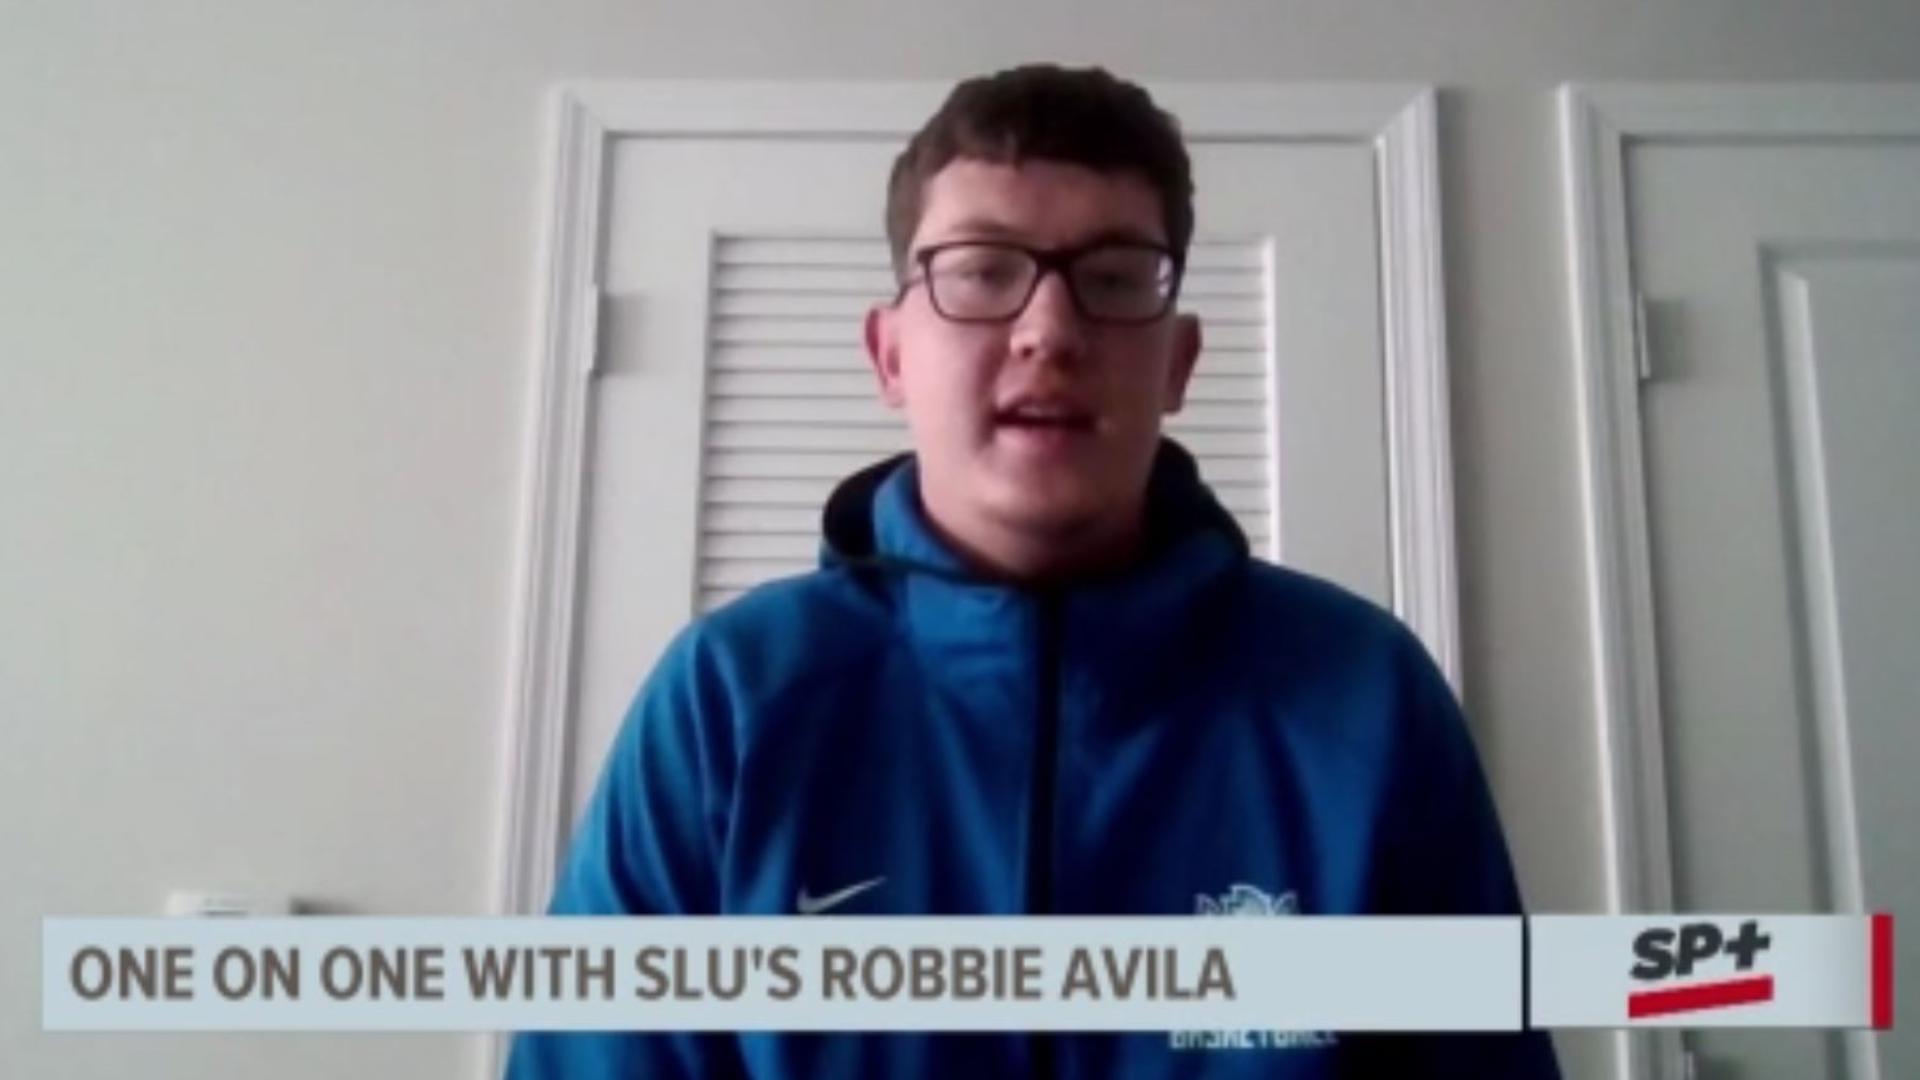 5 On Your Side sat down with Saint Louis University's Robbie Avila. He will play for the Billikens basketball team in 2024 under head coach Josh Schertz.